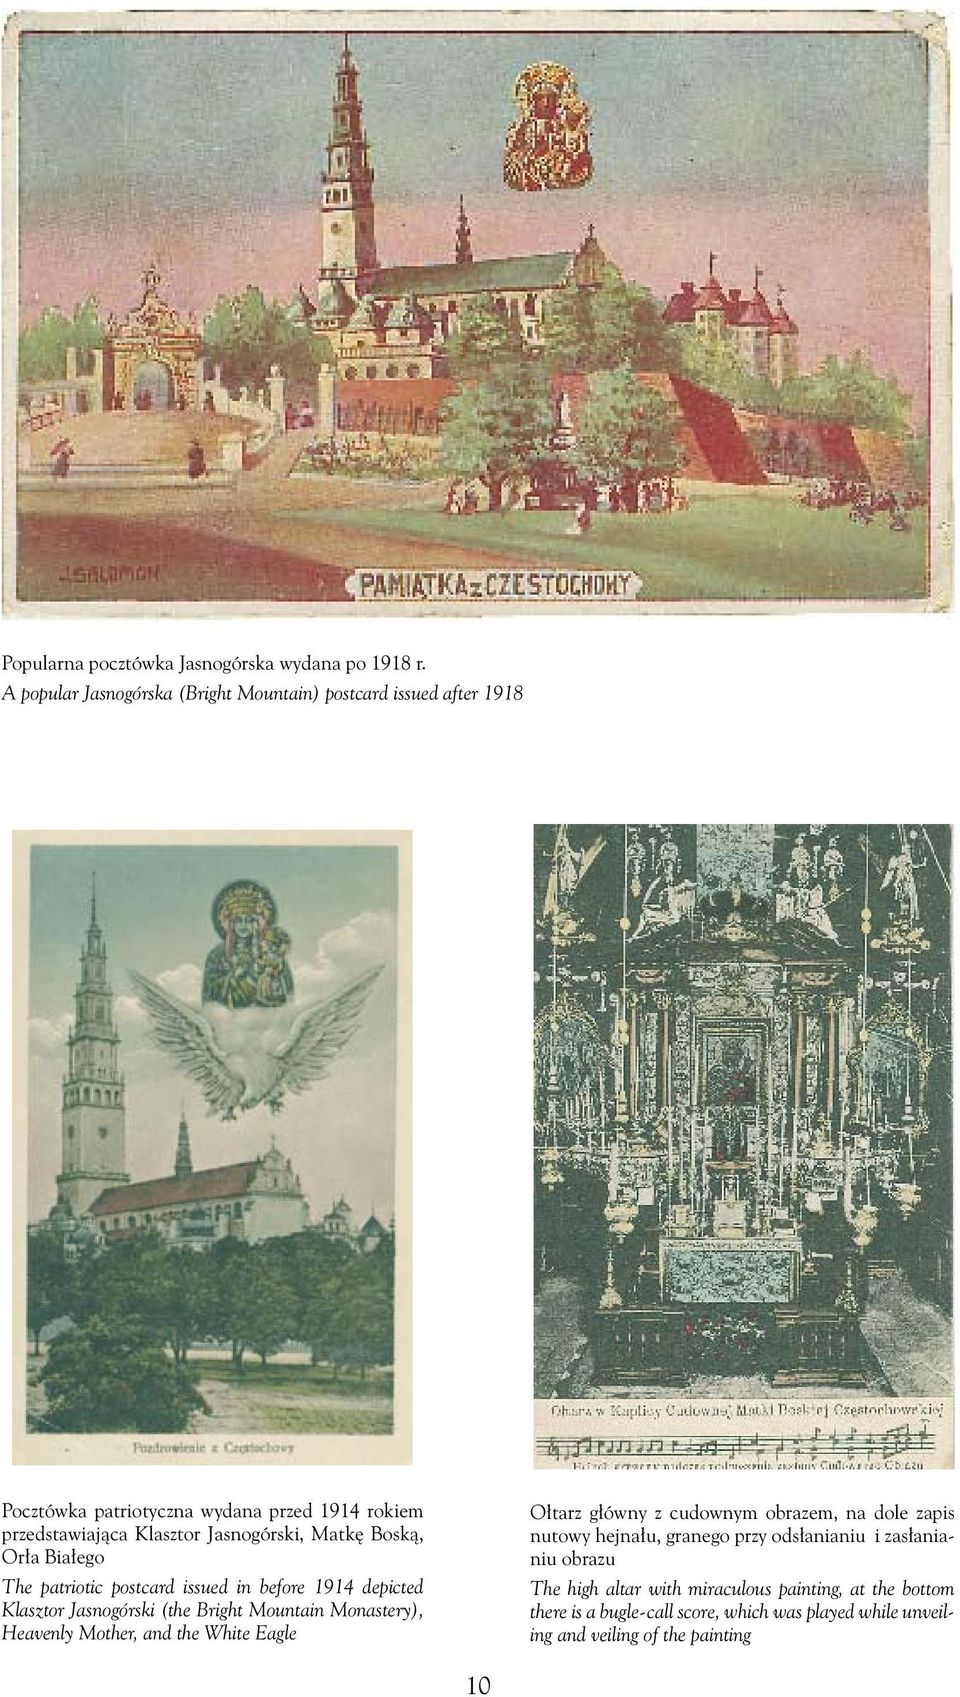 Matkę Boską, Orła Białego The patriotic postcard issued in before 1914 depicted Klasztor Jasnogórski (the Bright Mountain Monastery), Heavenly Mother, and